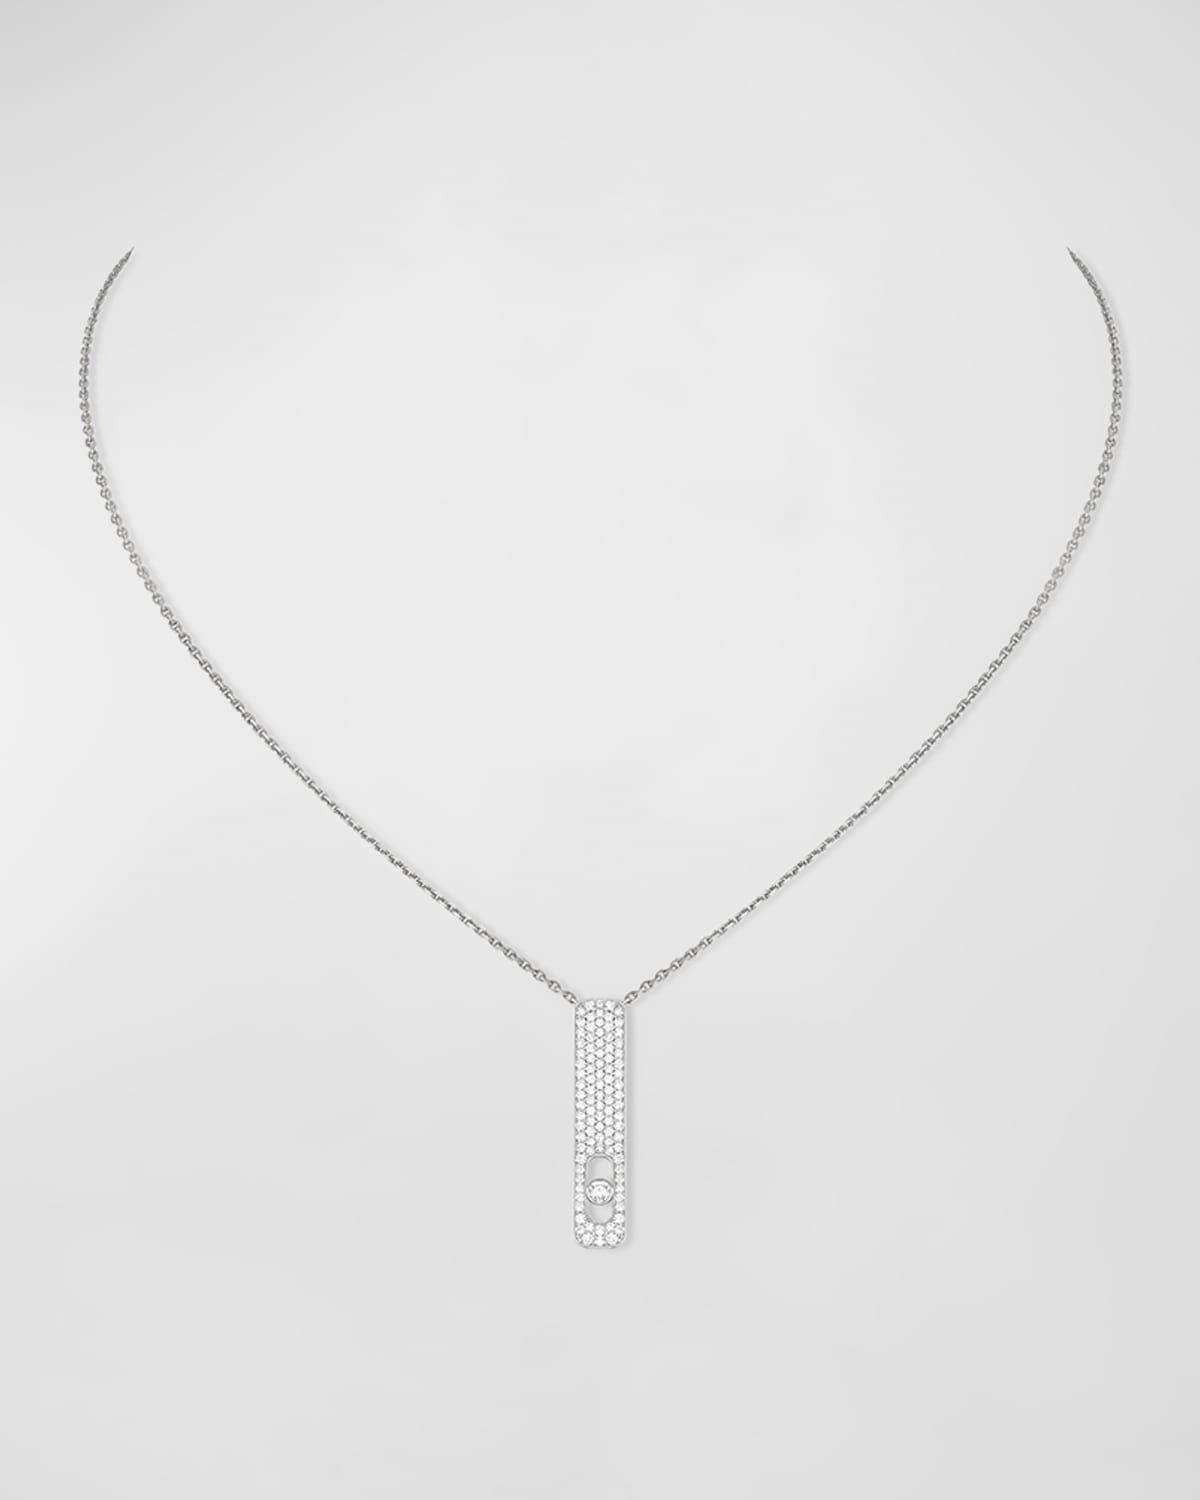 Jewel Tie 14K White Gold Heart Disc Charm 0.71 in x 0.55 in